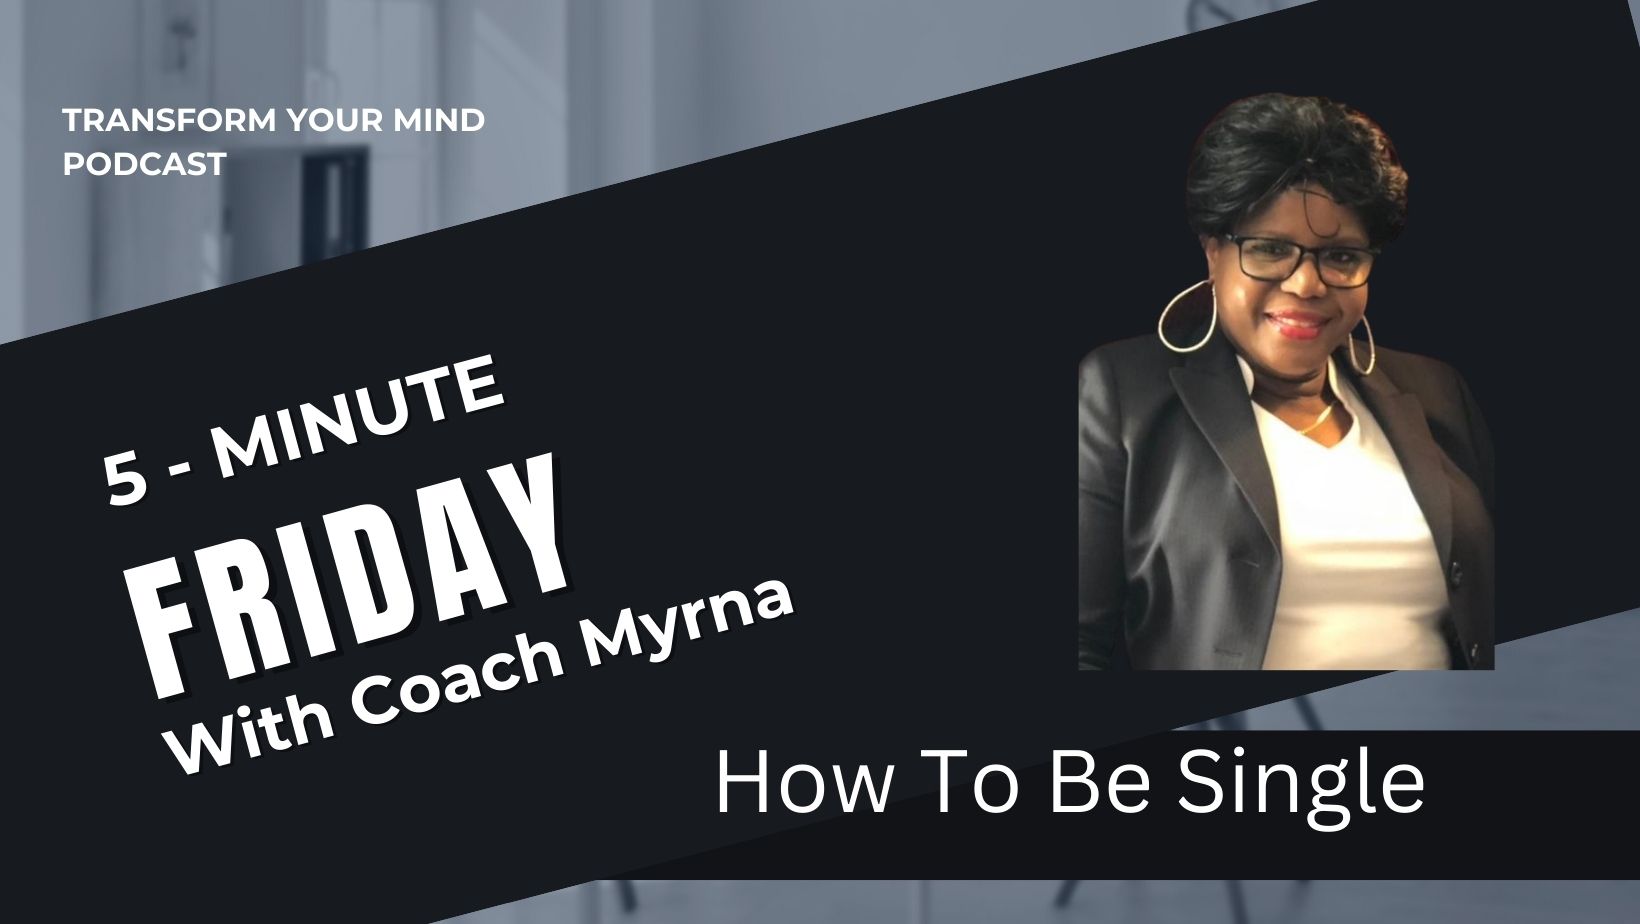 Coach Myrna: How to be single